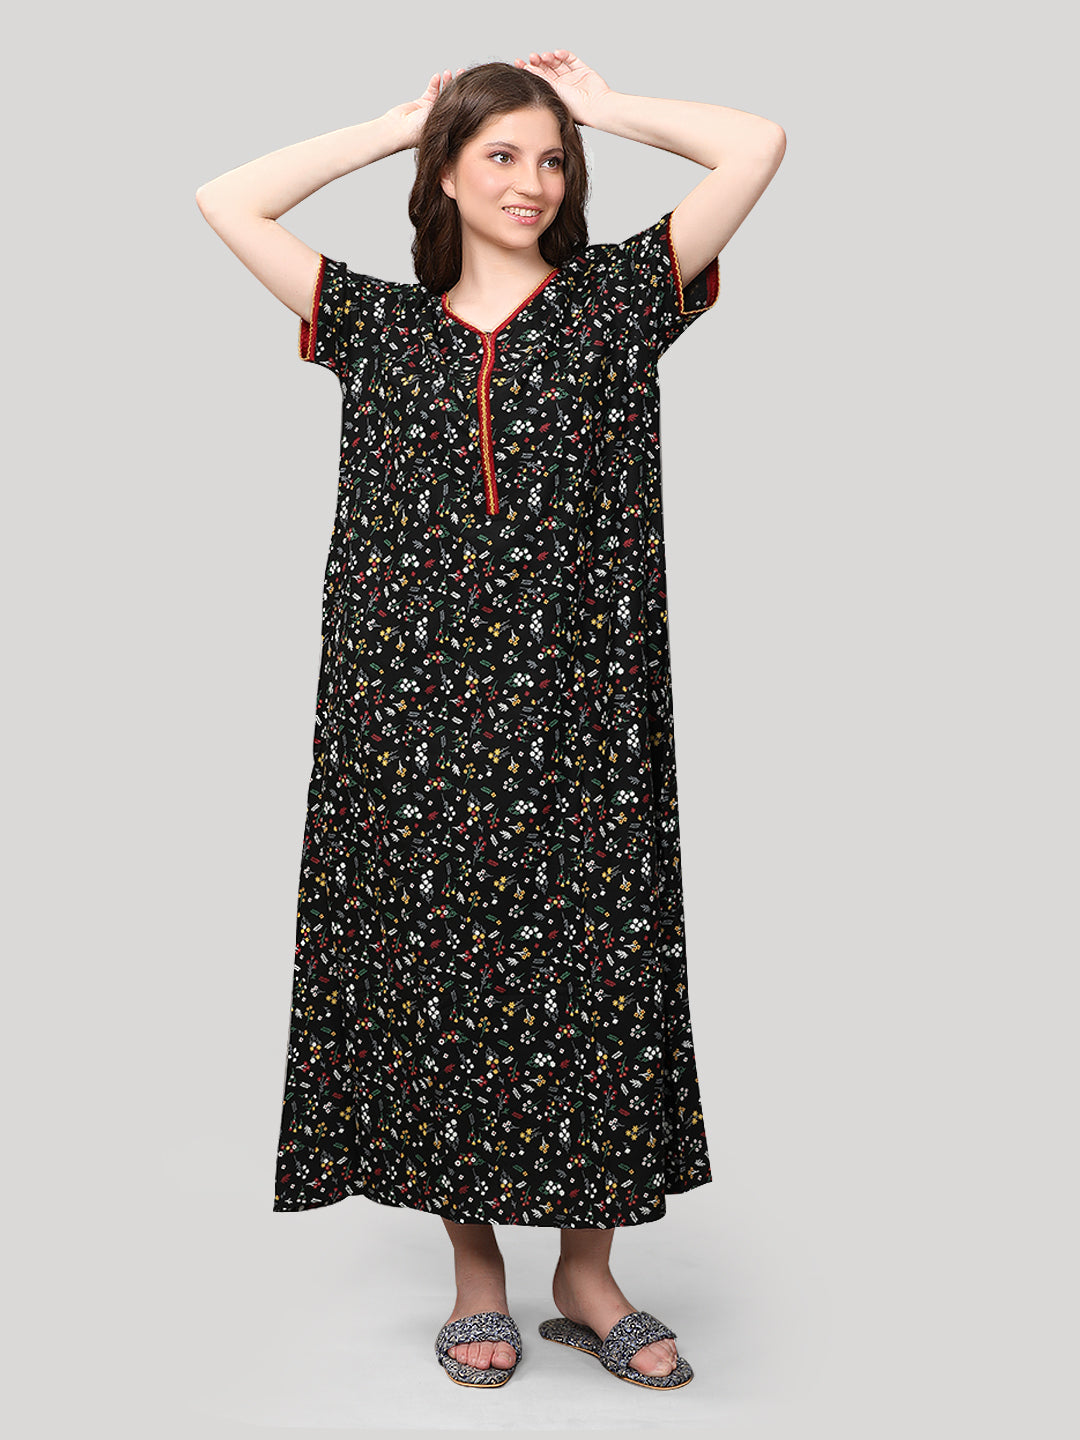 Evolove Women's 100% Viscose Printed Maxi Nightgown Long Nighty Sleepwear for Ladies Super Soft Comfortable Design